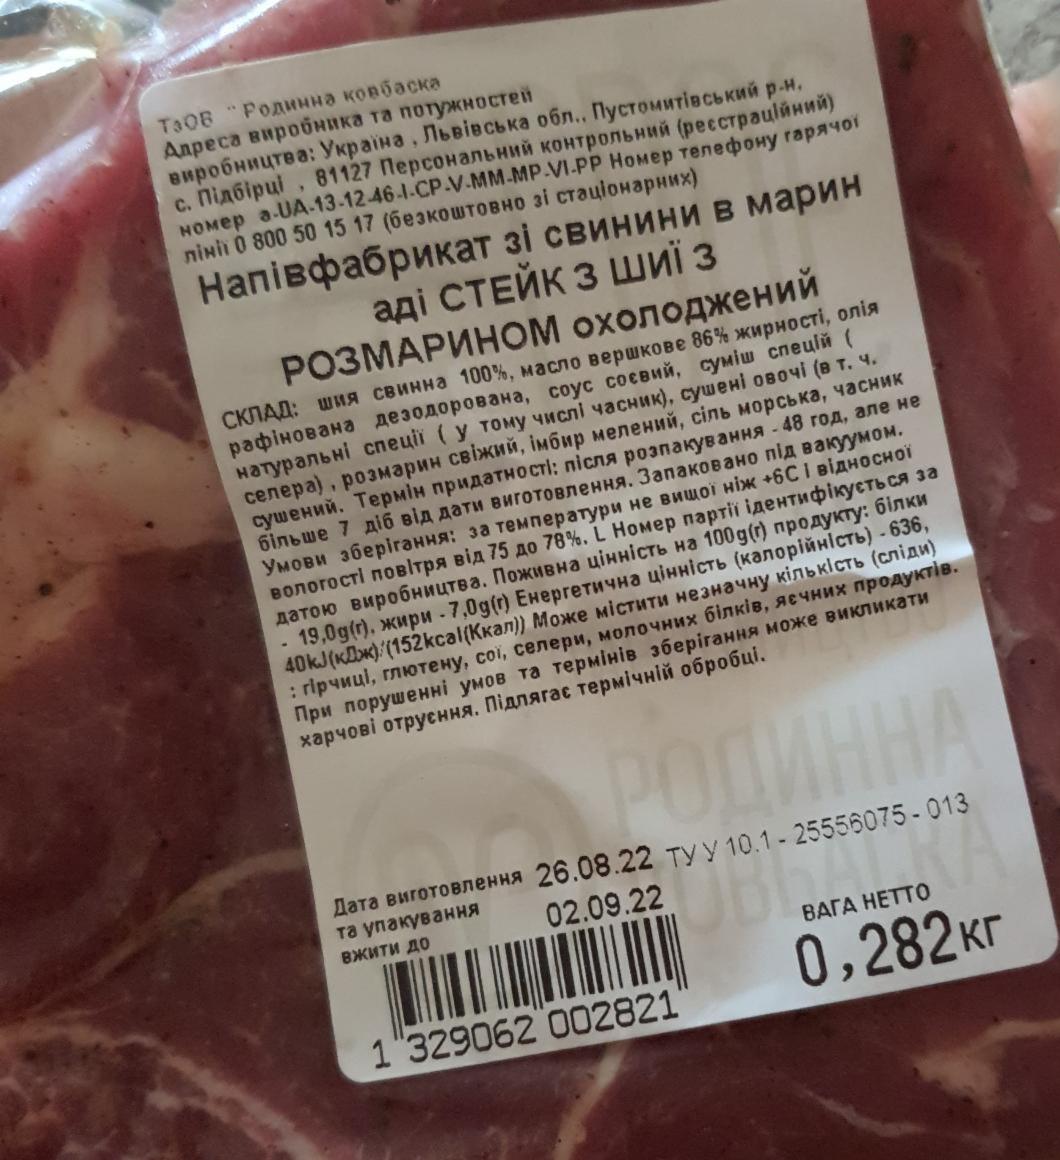 Familien-packung frische Metzgerfrisch minutensteaks schweine харчова - ⋙TablycjaKalorijnosti цінність калорійність